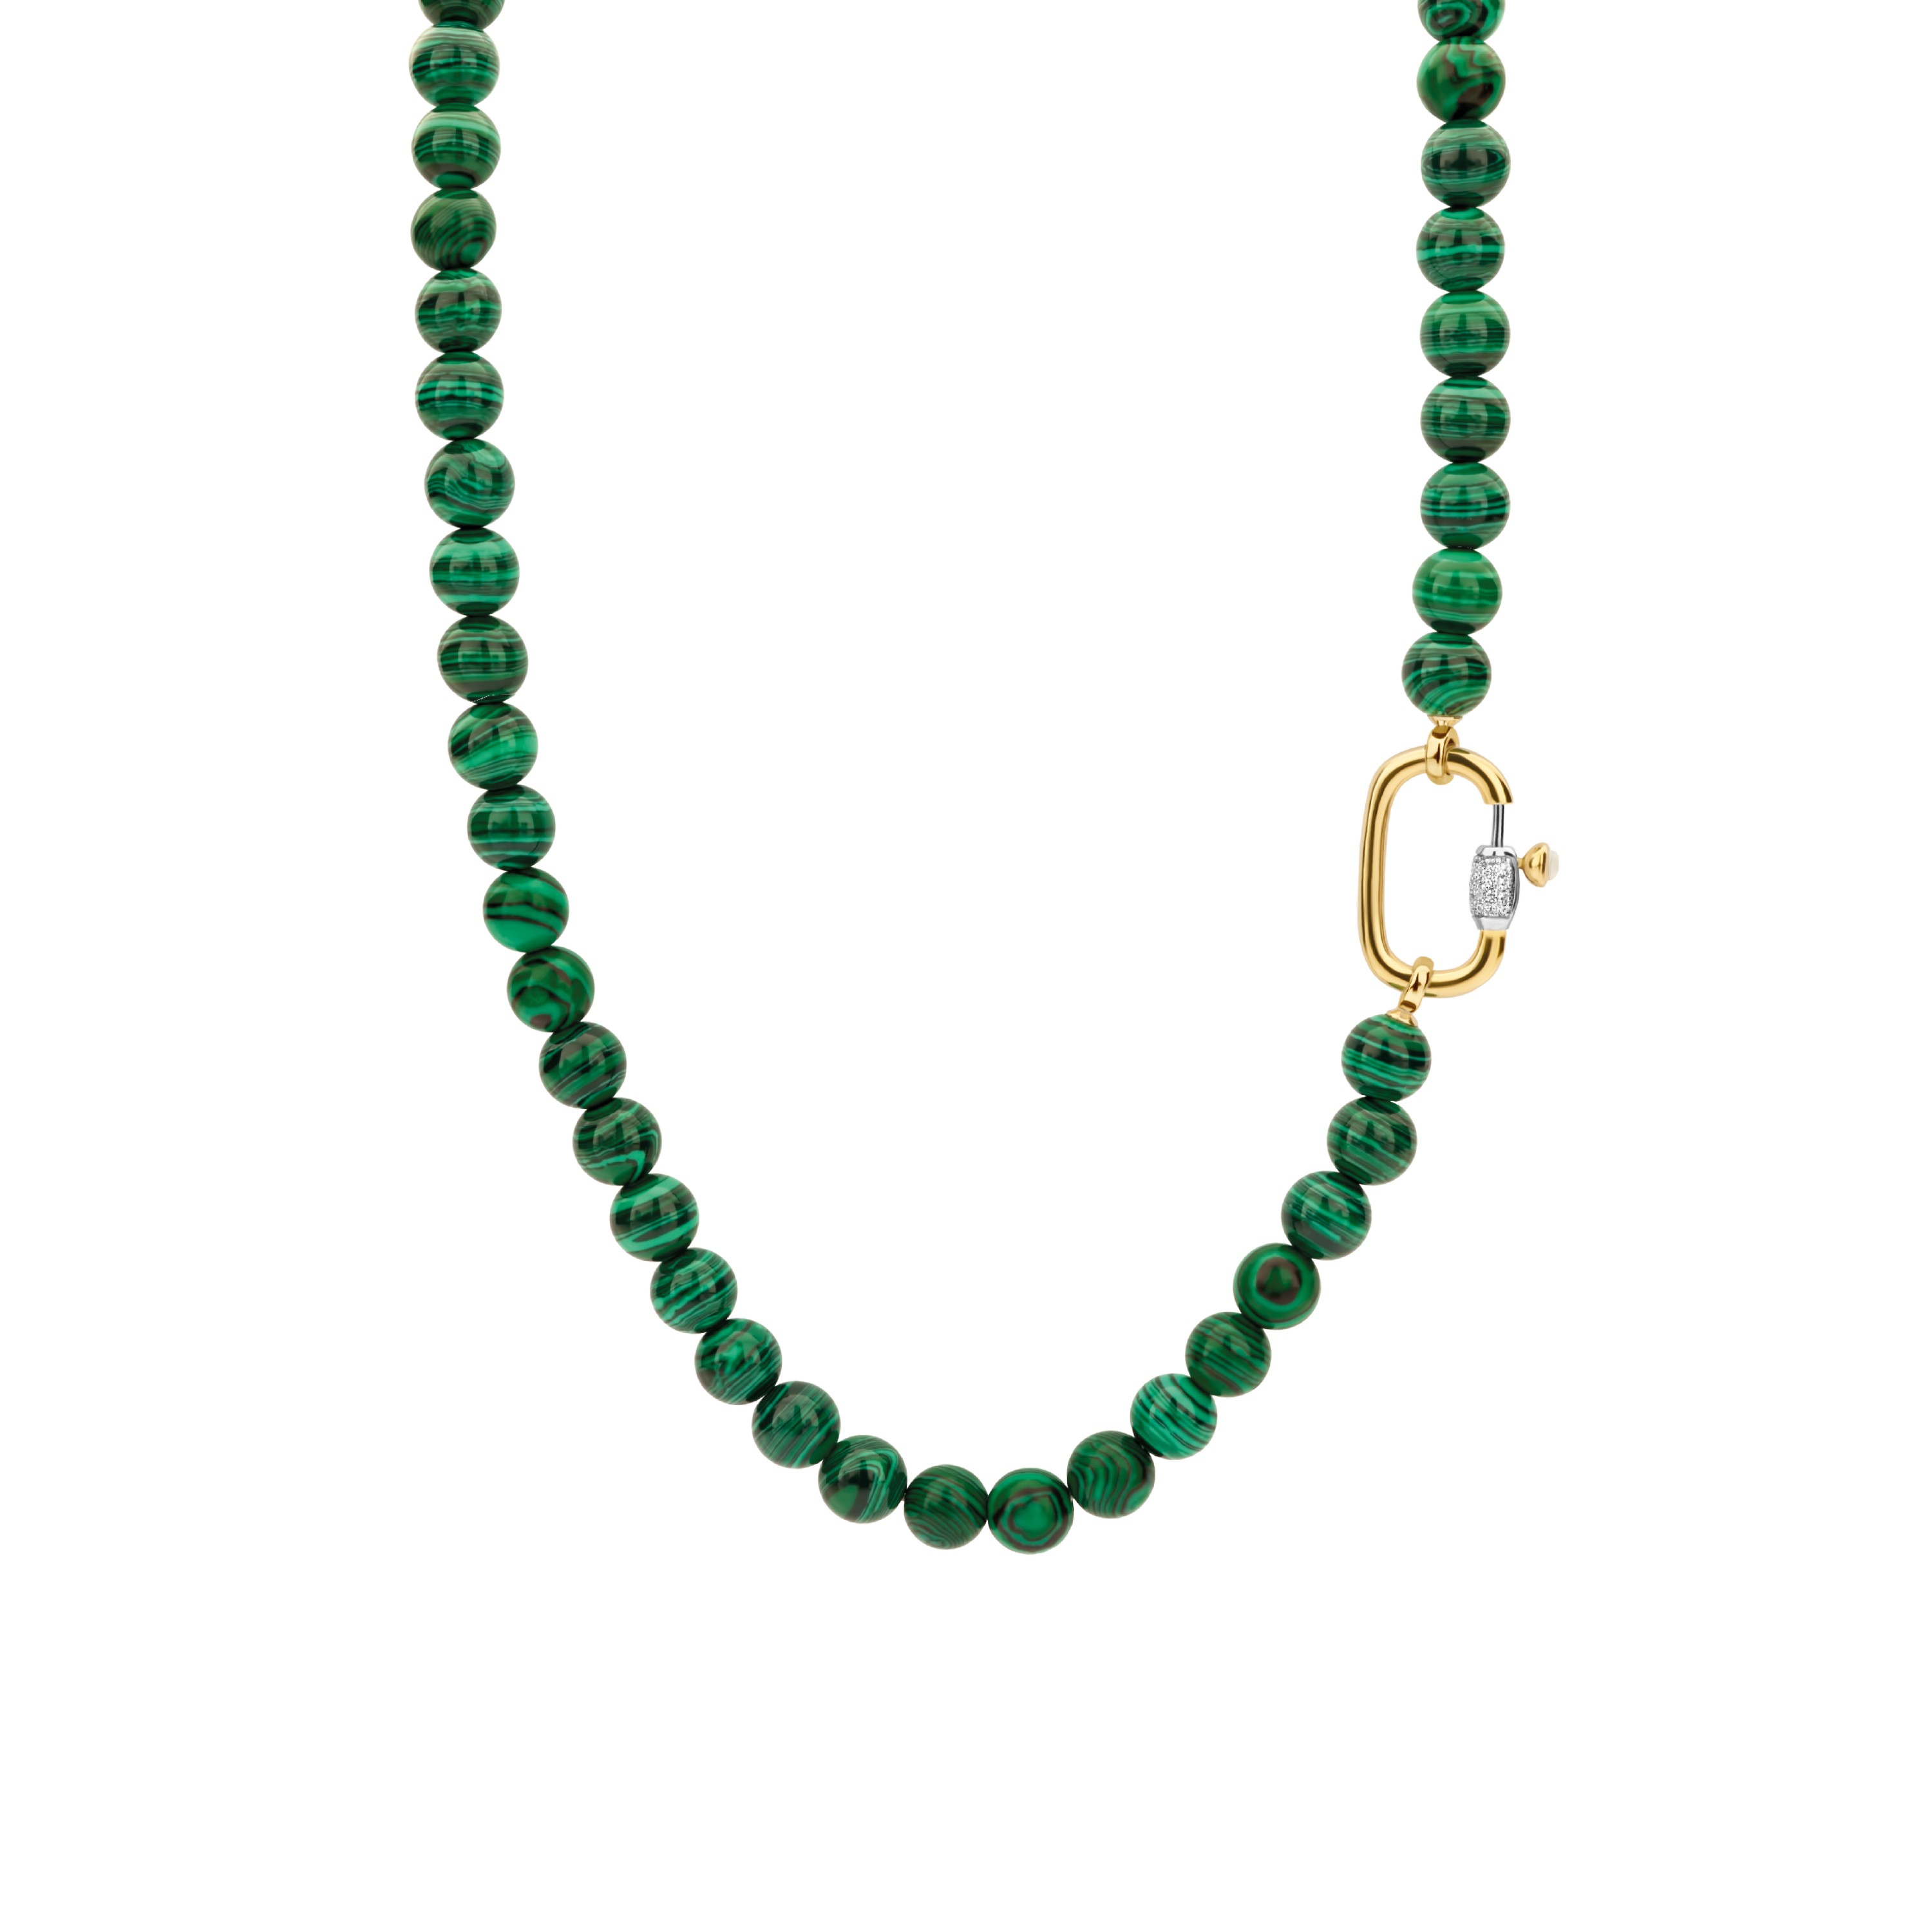 TI SENTO - Milano Necklace 3967MA Gala Jewelers Inc. White Oak, PA